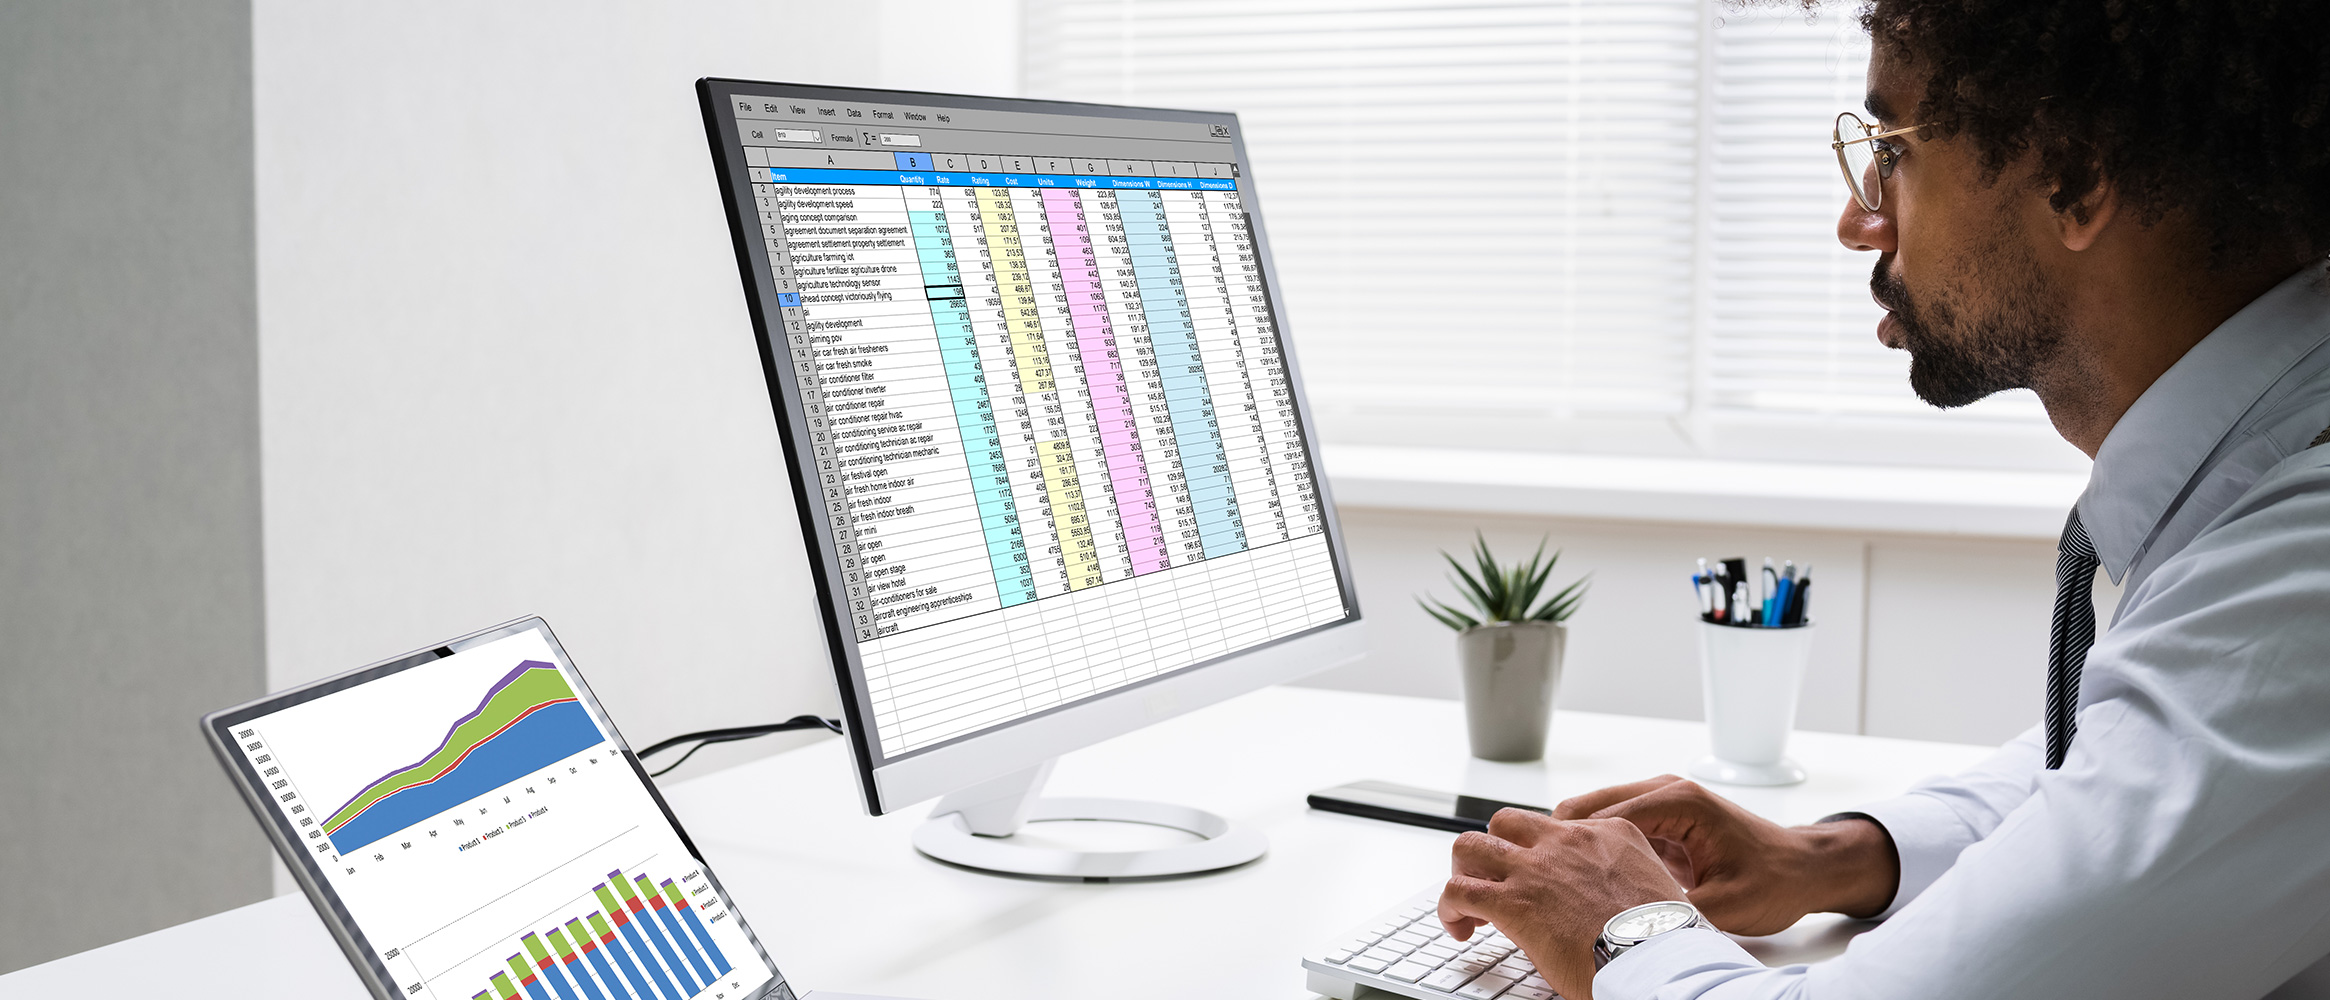 McMaster Continuing Education Microsoft Excel – Analyzing and Visualizing Data Program